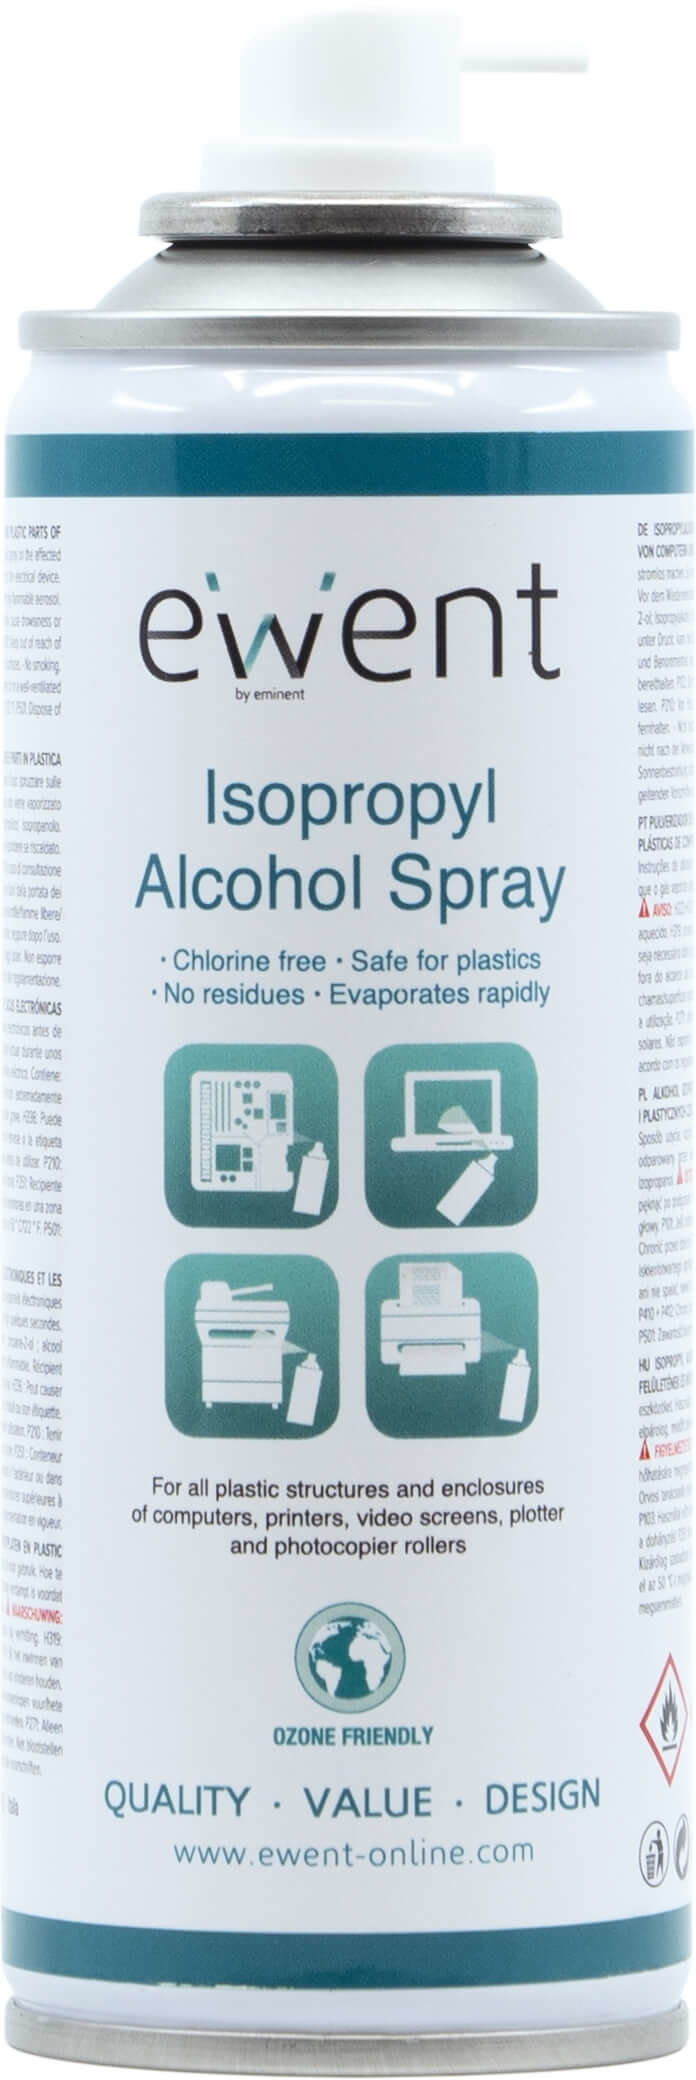 Rusty Mountaineer Want Spray Ewent Alcool Isopropílico 70% 200ml | Globaldata